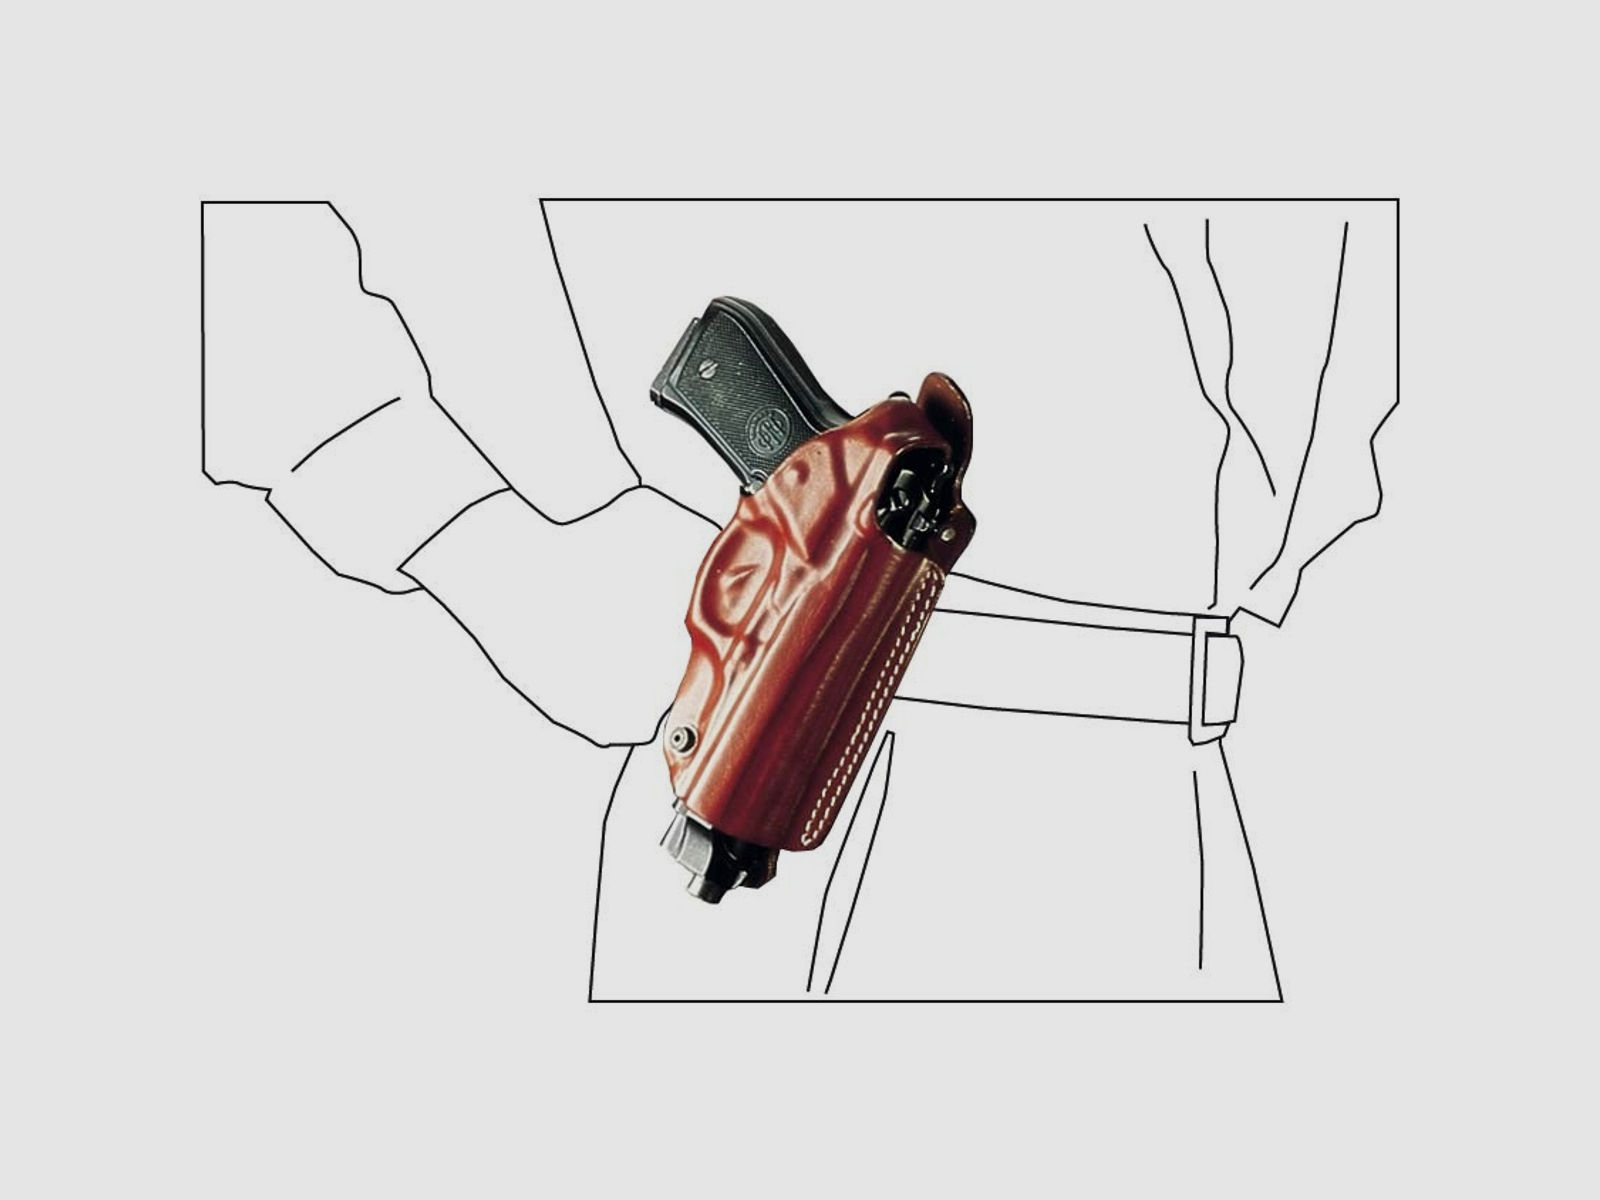 Mehrzweck-Schulterholster/Gürtelholster "Miami" Glock 20/21,  H&K USP, P30L, SFP9-VP9, CZ P07-Braun-Rechtshänder